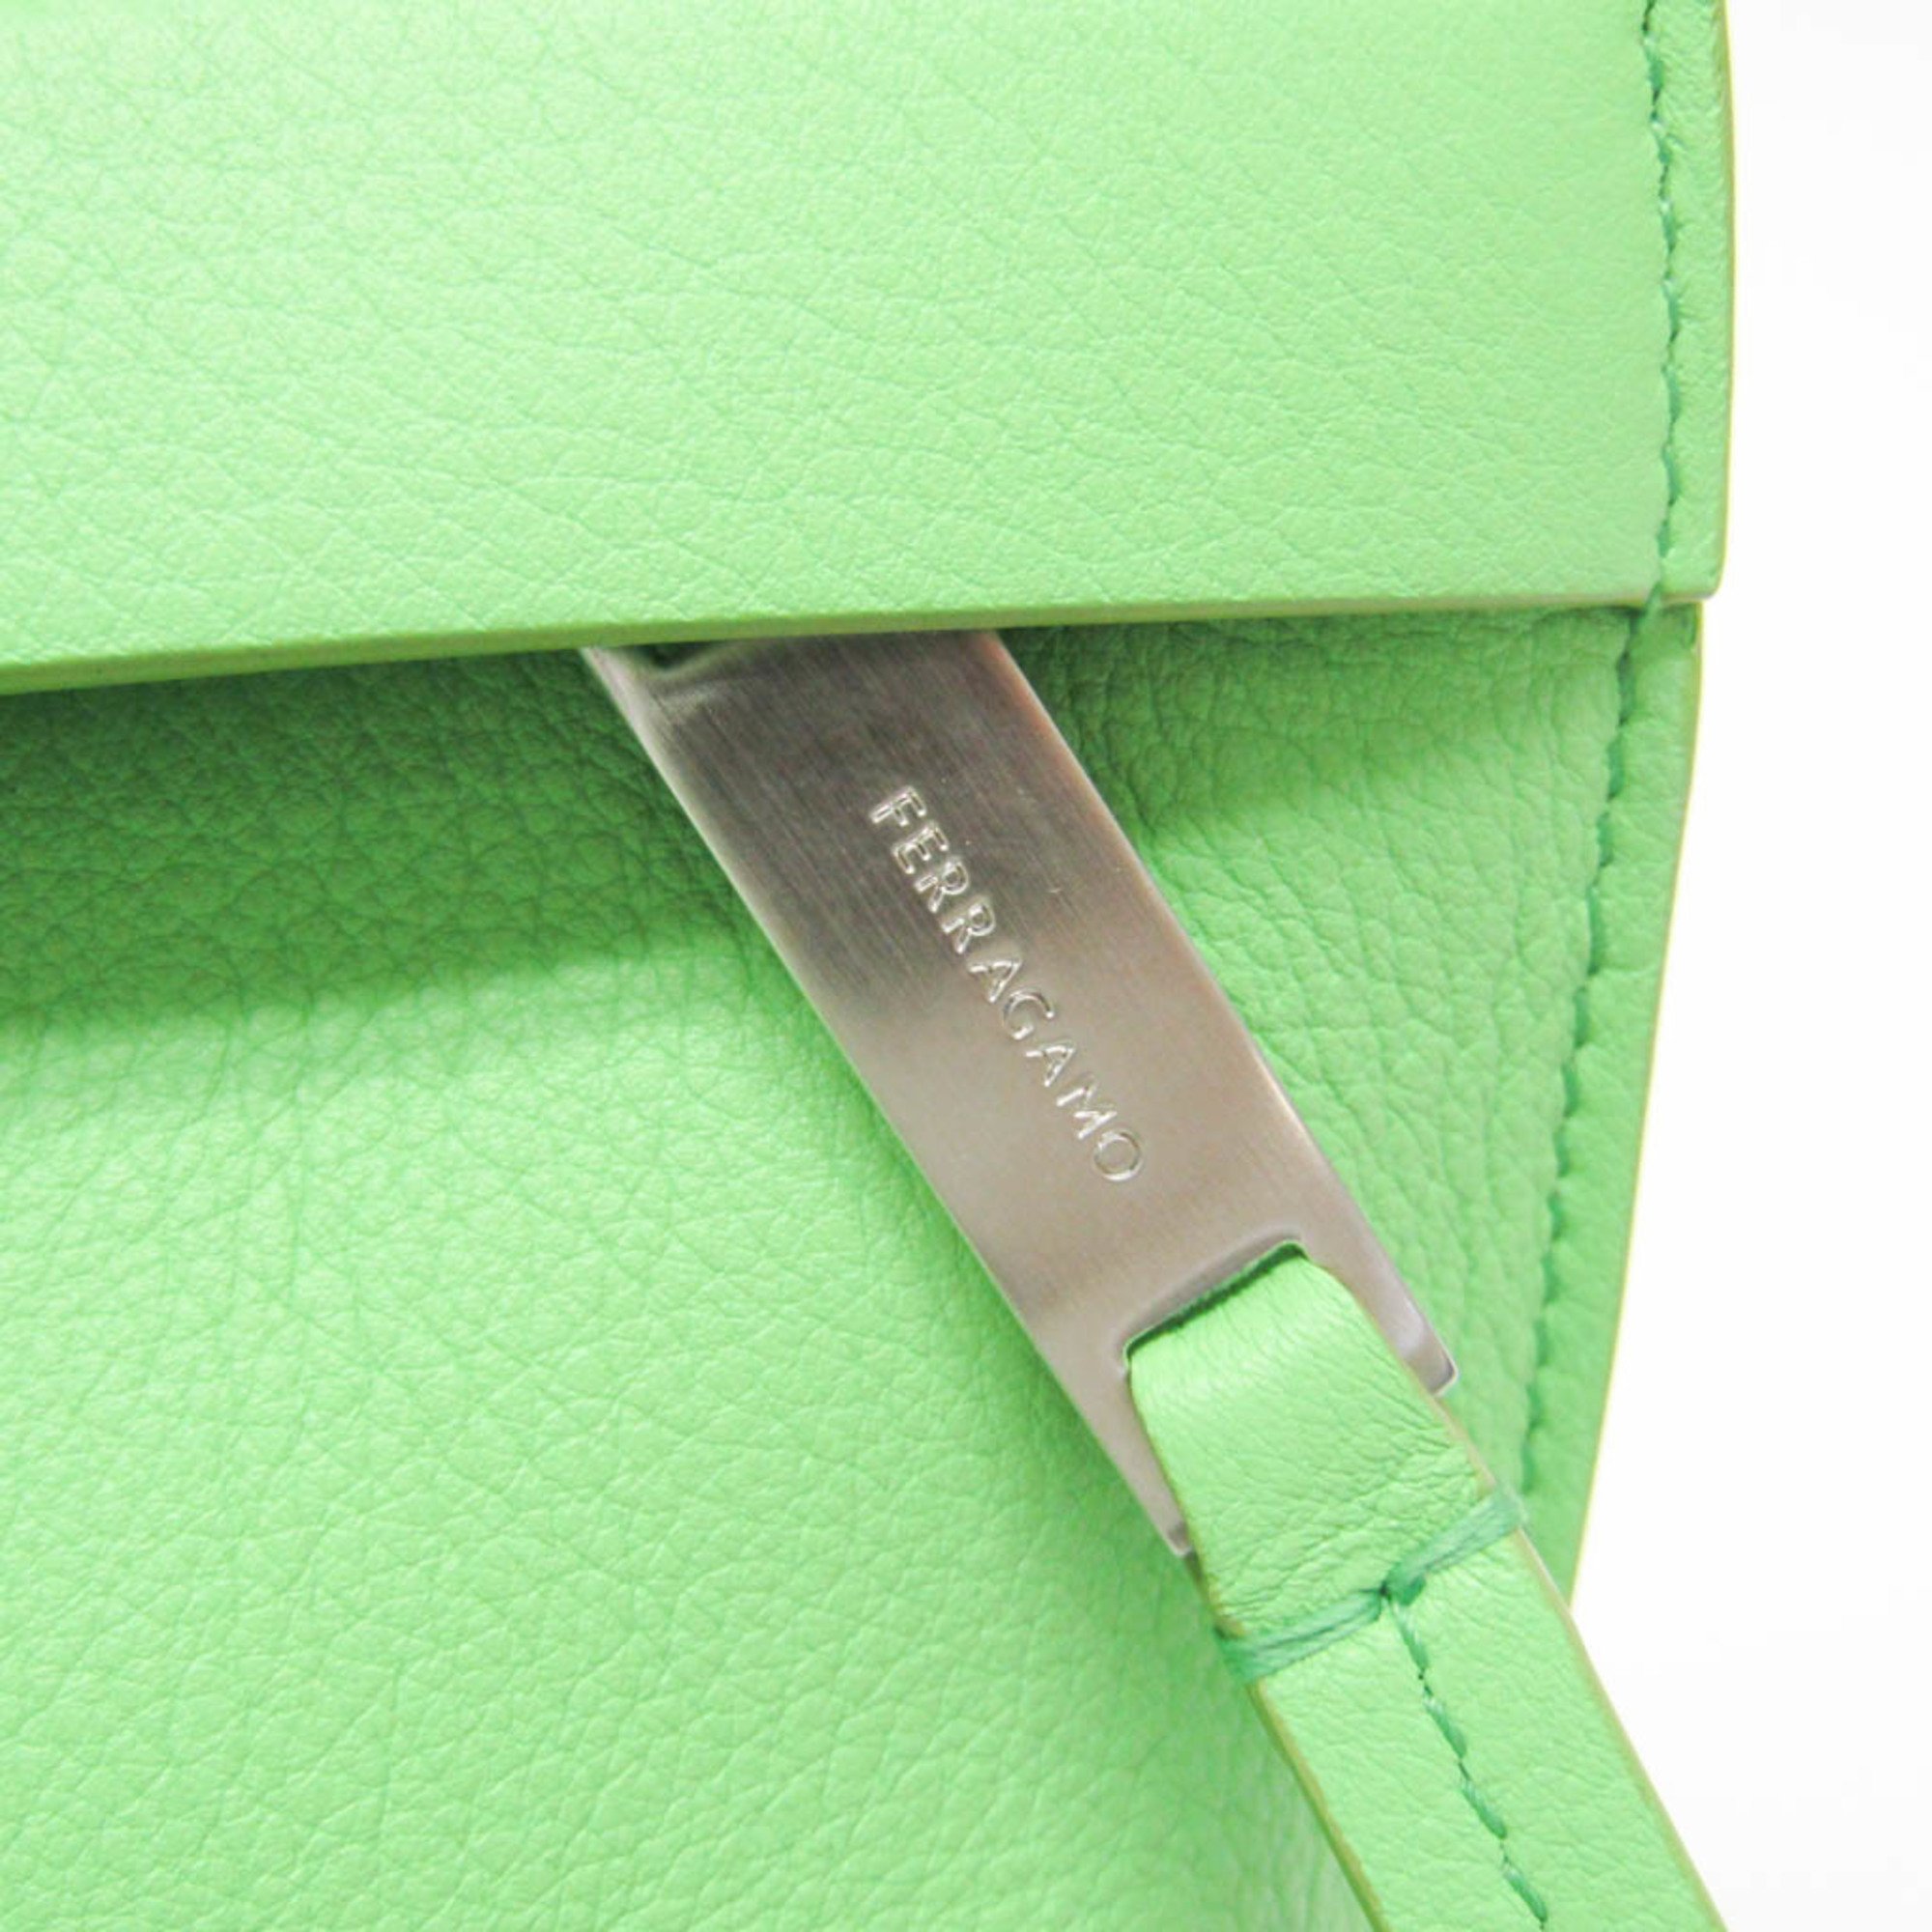 Salvatore Ferragamo AU-24 1390 Women's Leather Clutch Bag,Pouch Light Green